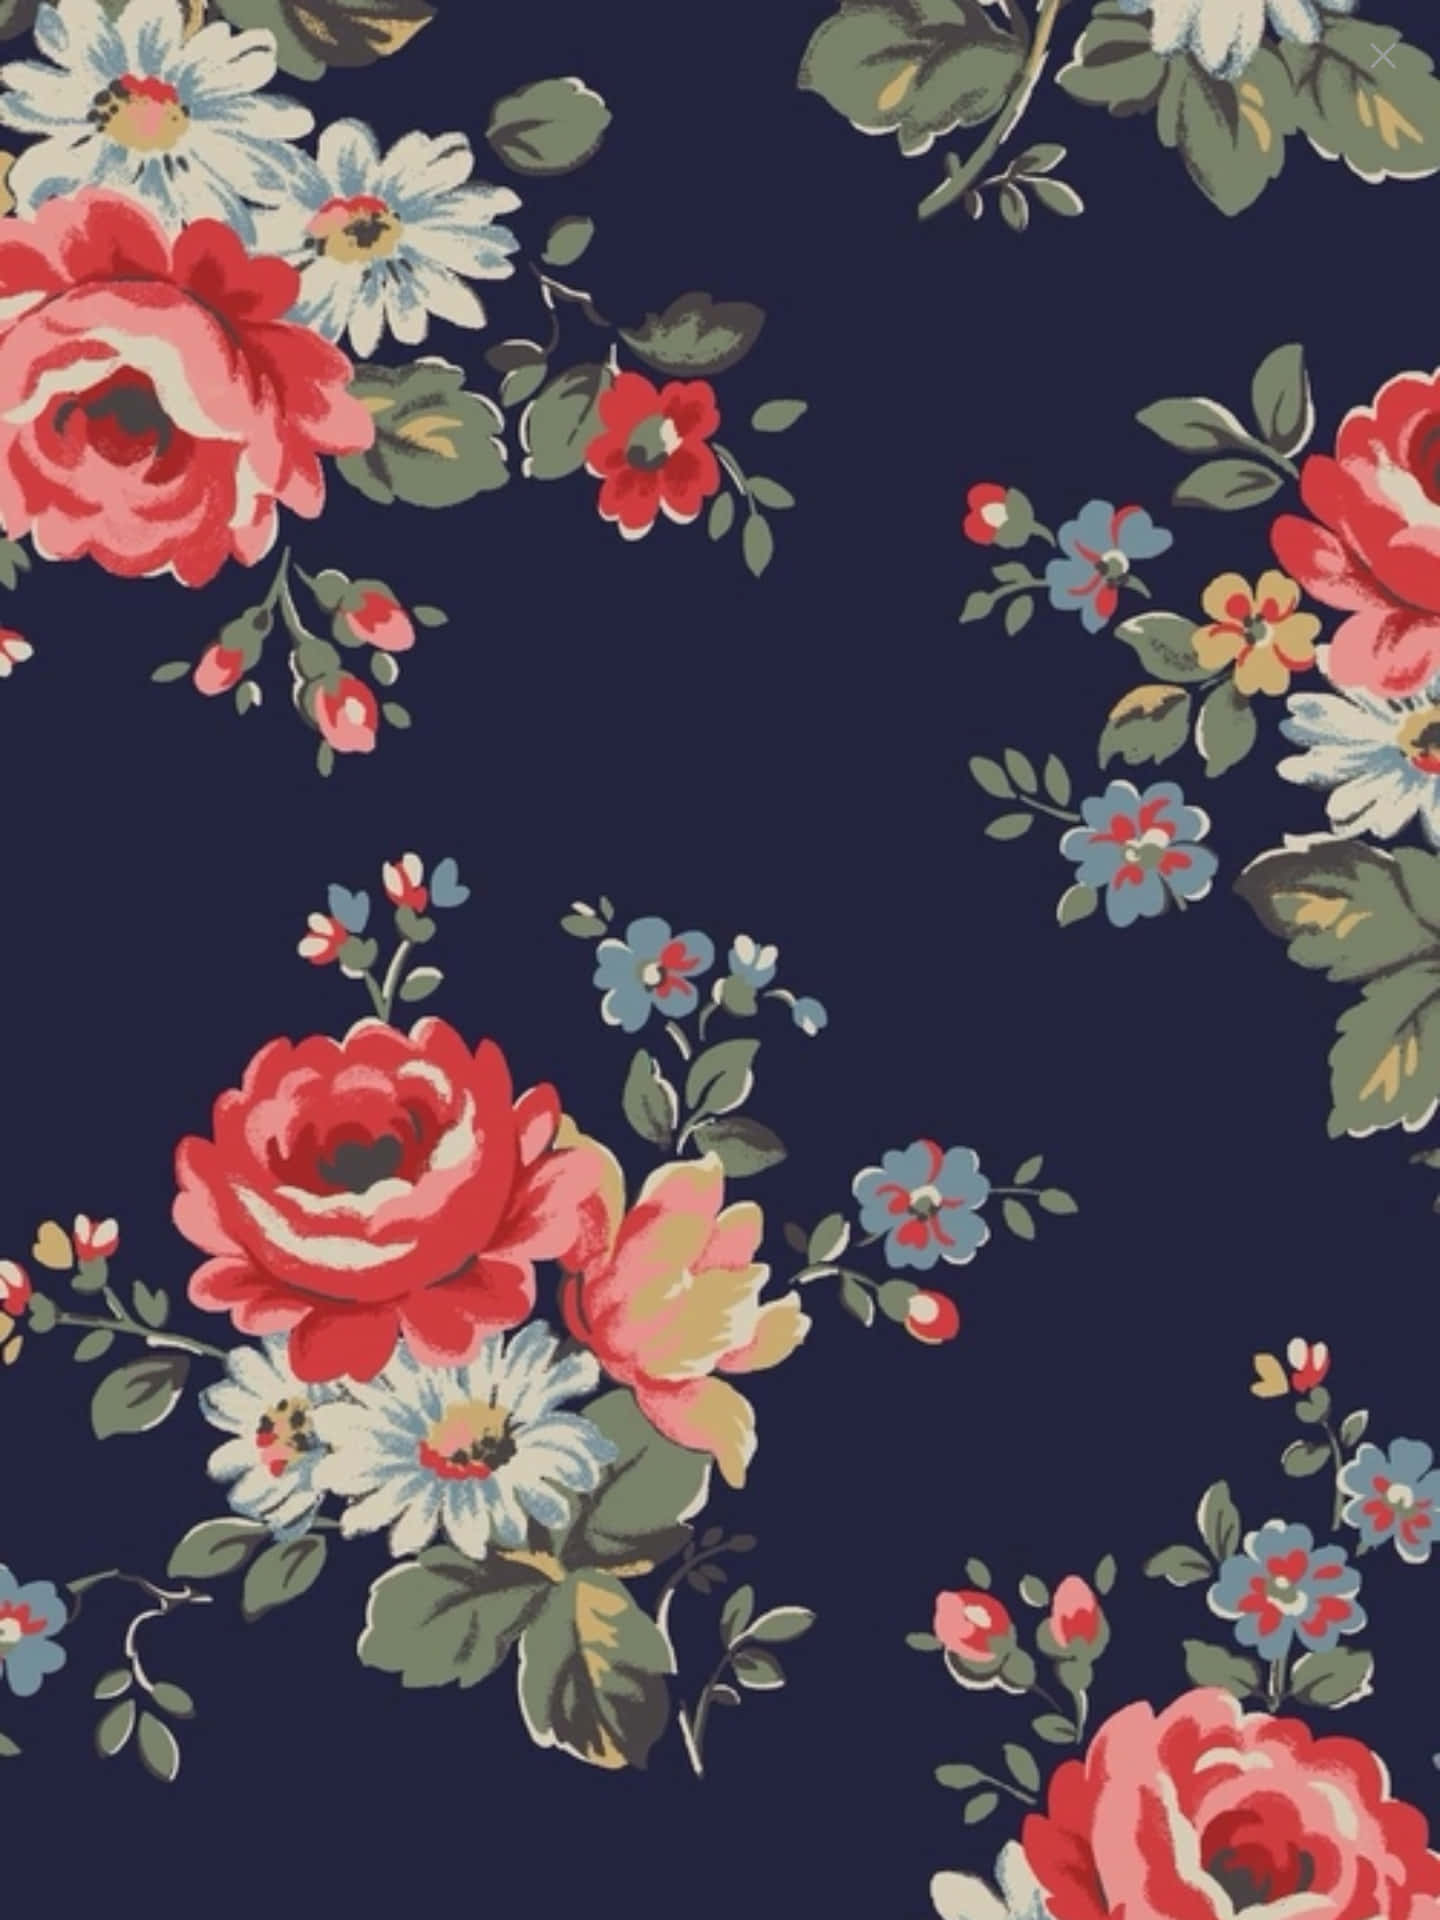 Vintage Floral Pattern Dark Background Wallpaper